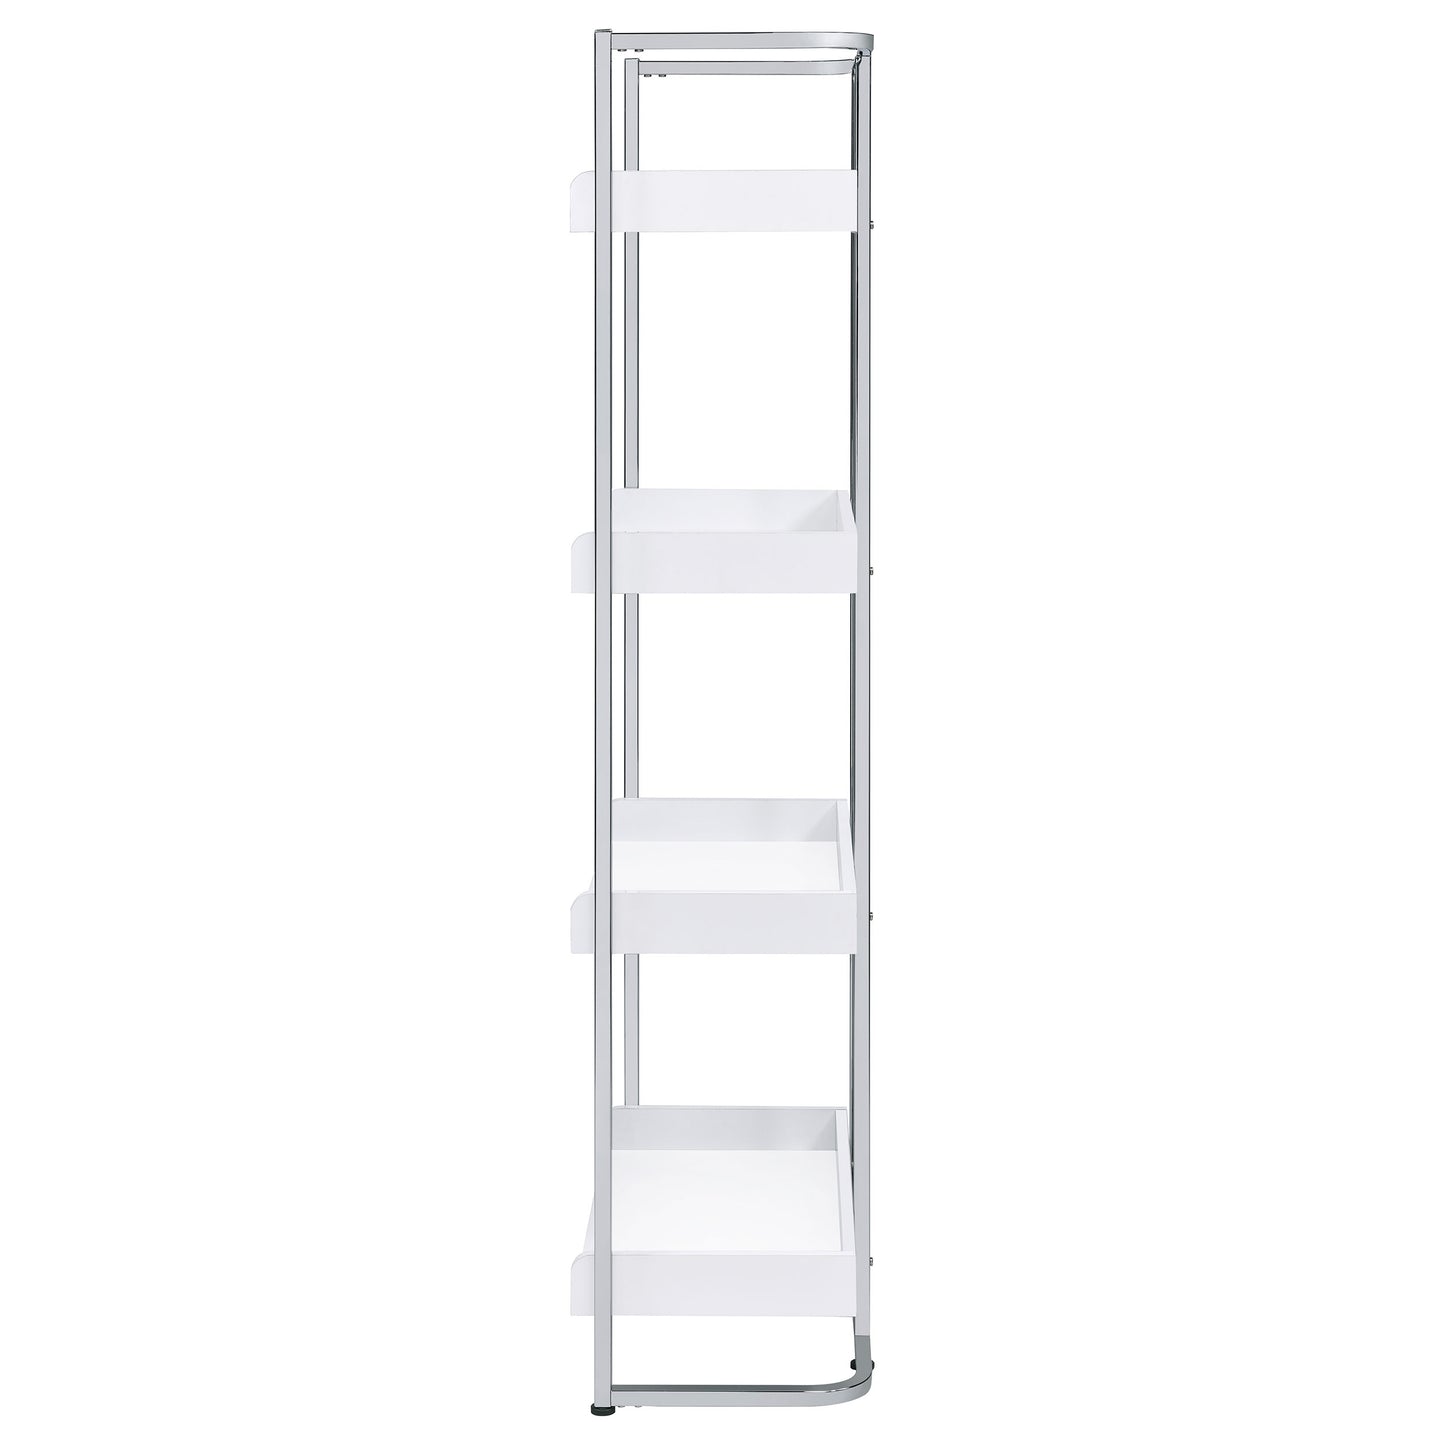 Ember 4-shelf Bookcase White High Gloss and Chrome